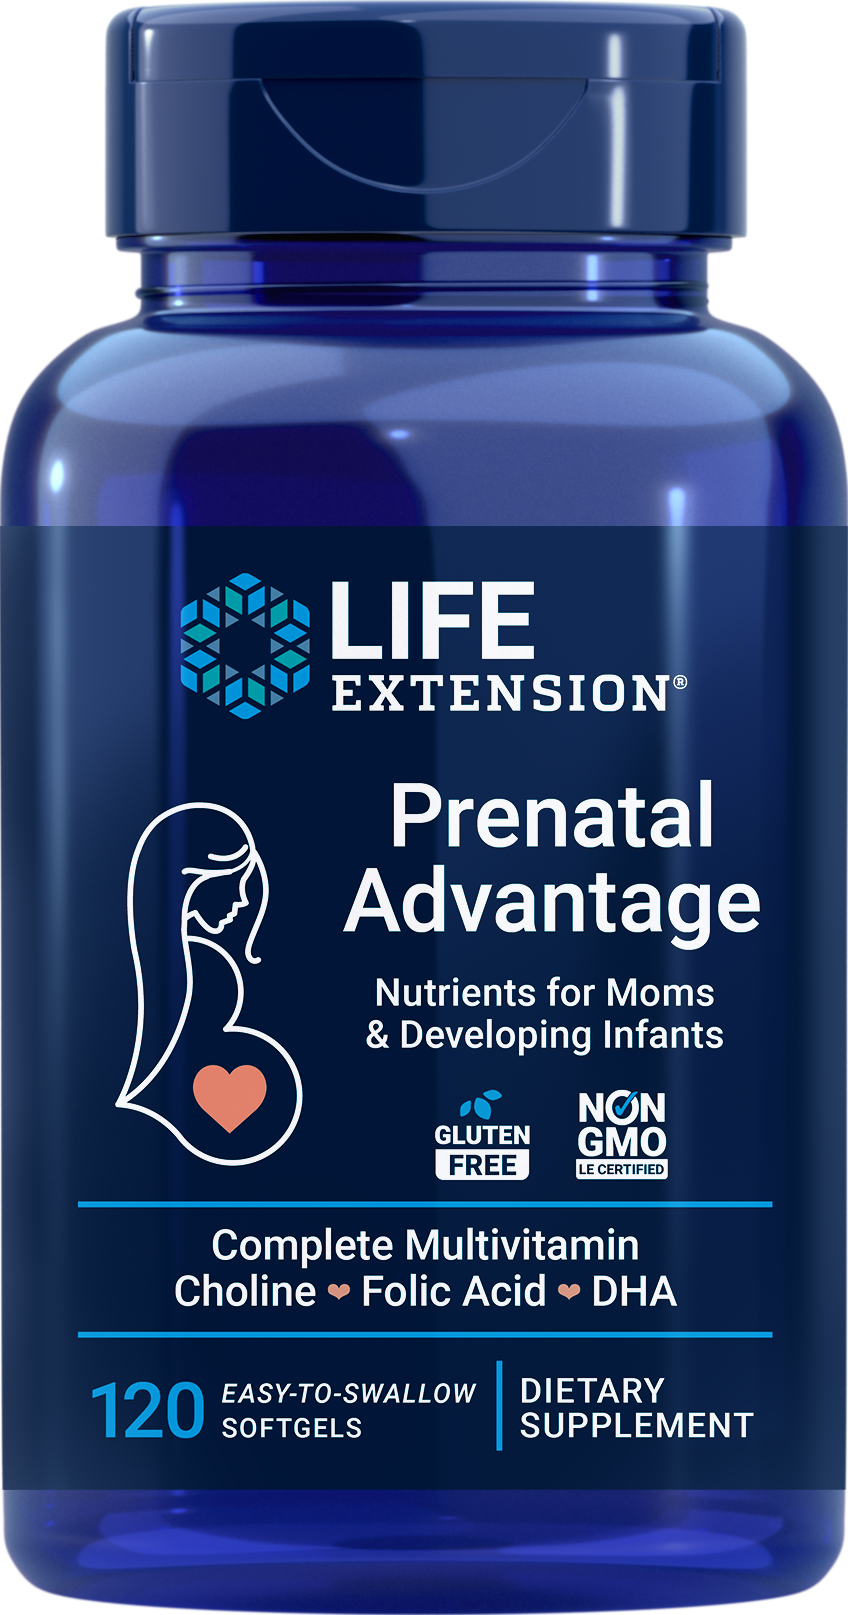 Prenatal Advantage